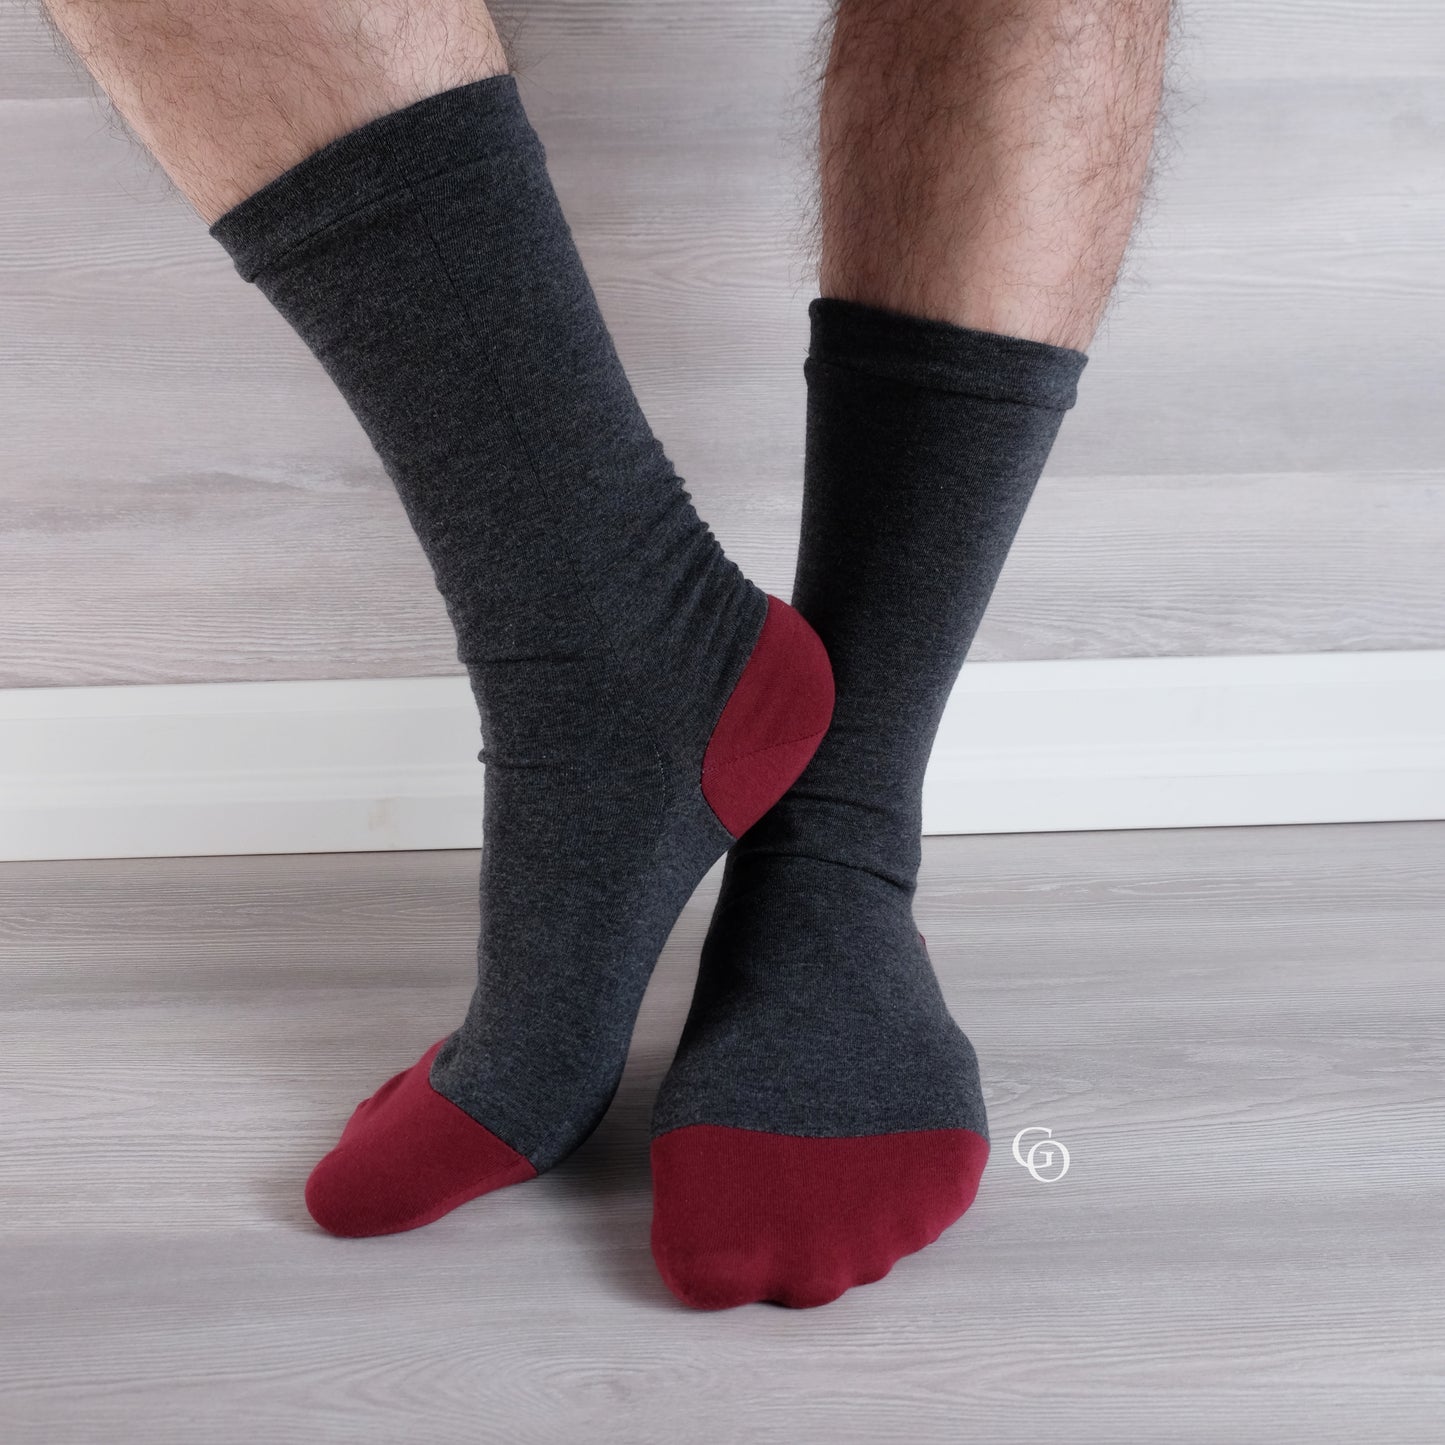 Going Rogue Socks - Size Women 4 - 17 Men